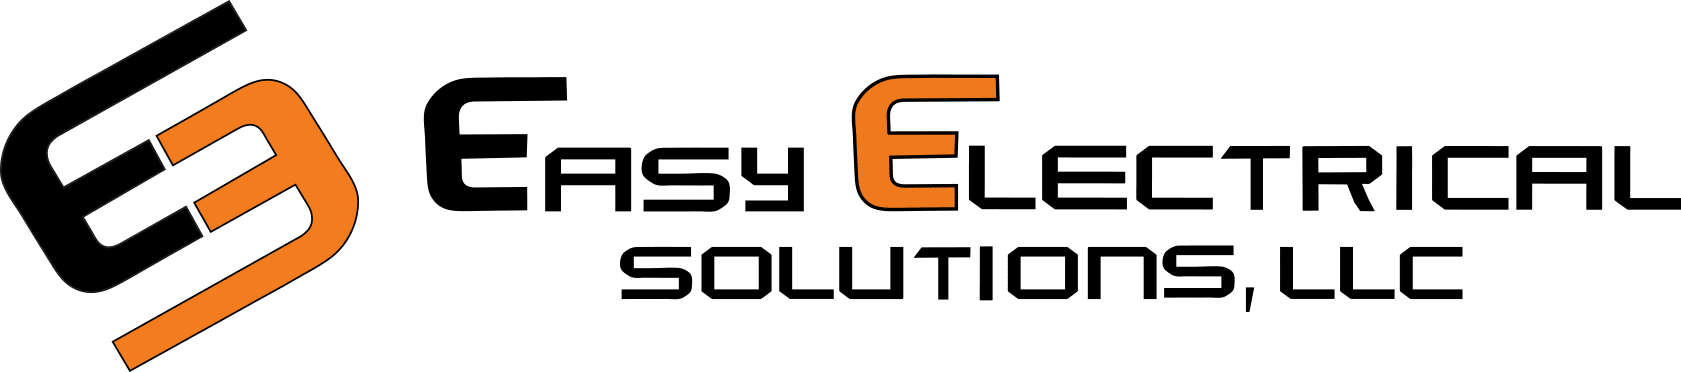 easy-electric-large-logo